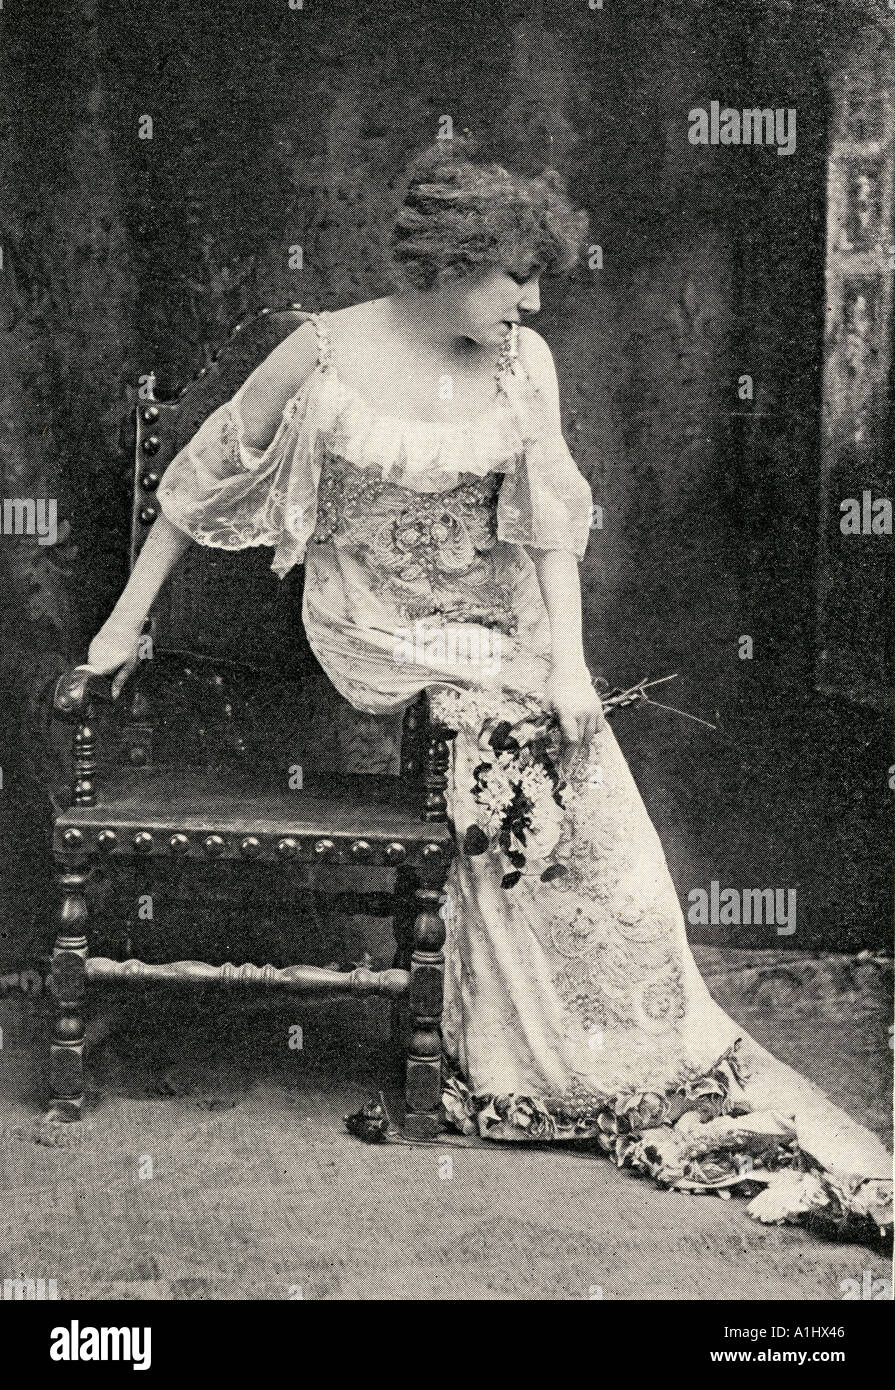 Sarah Bernhardt as Camille. Sarah Bernhardt Henriette Rosine Bernard, 1844 - 1923. French actress. Stock Photo